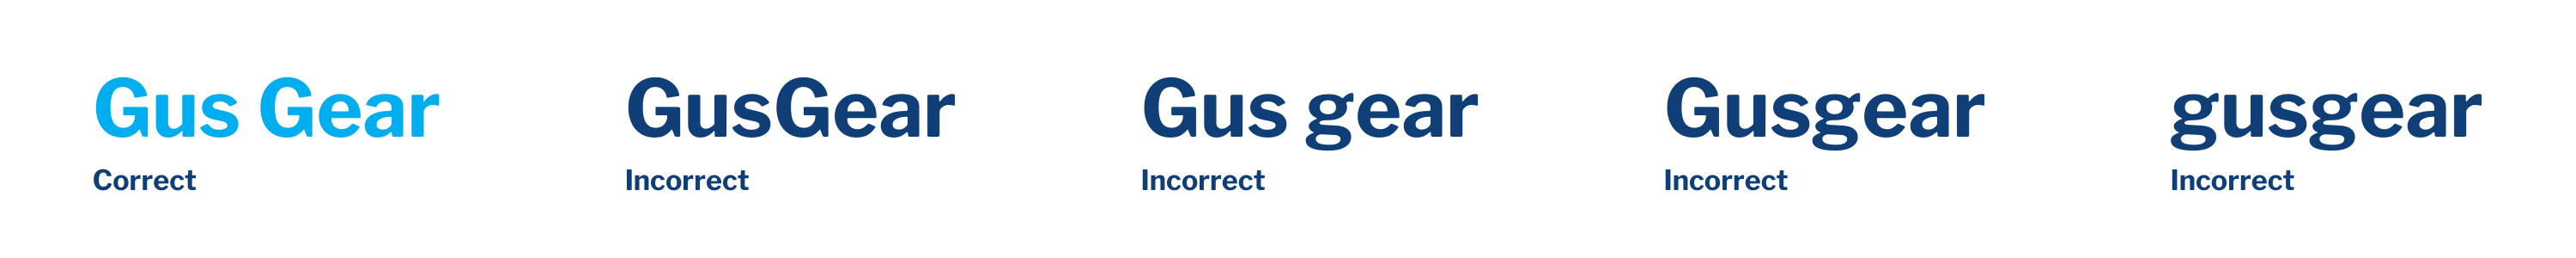 Gus Gear Brand Spelling Guide